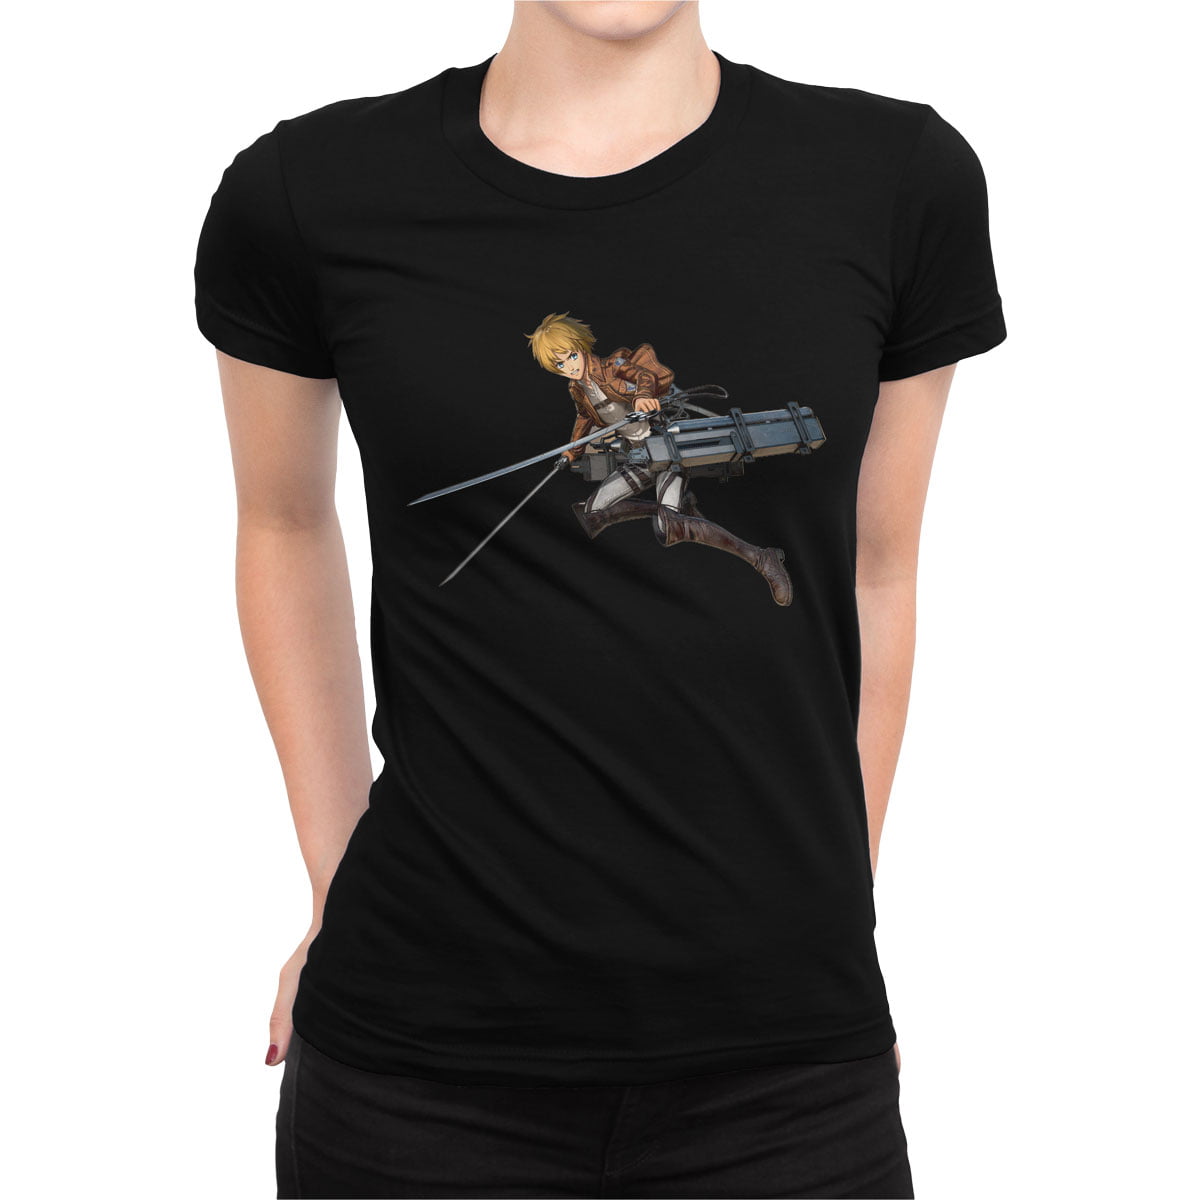 Attack on titan armin tisort kadin s - attack on titan (titana saldırı) armin kadın t-shirt - figurex